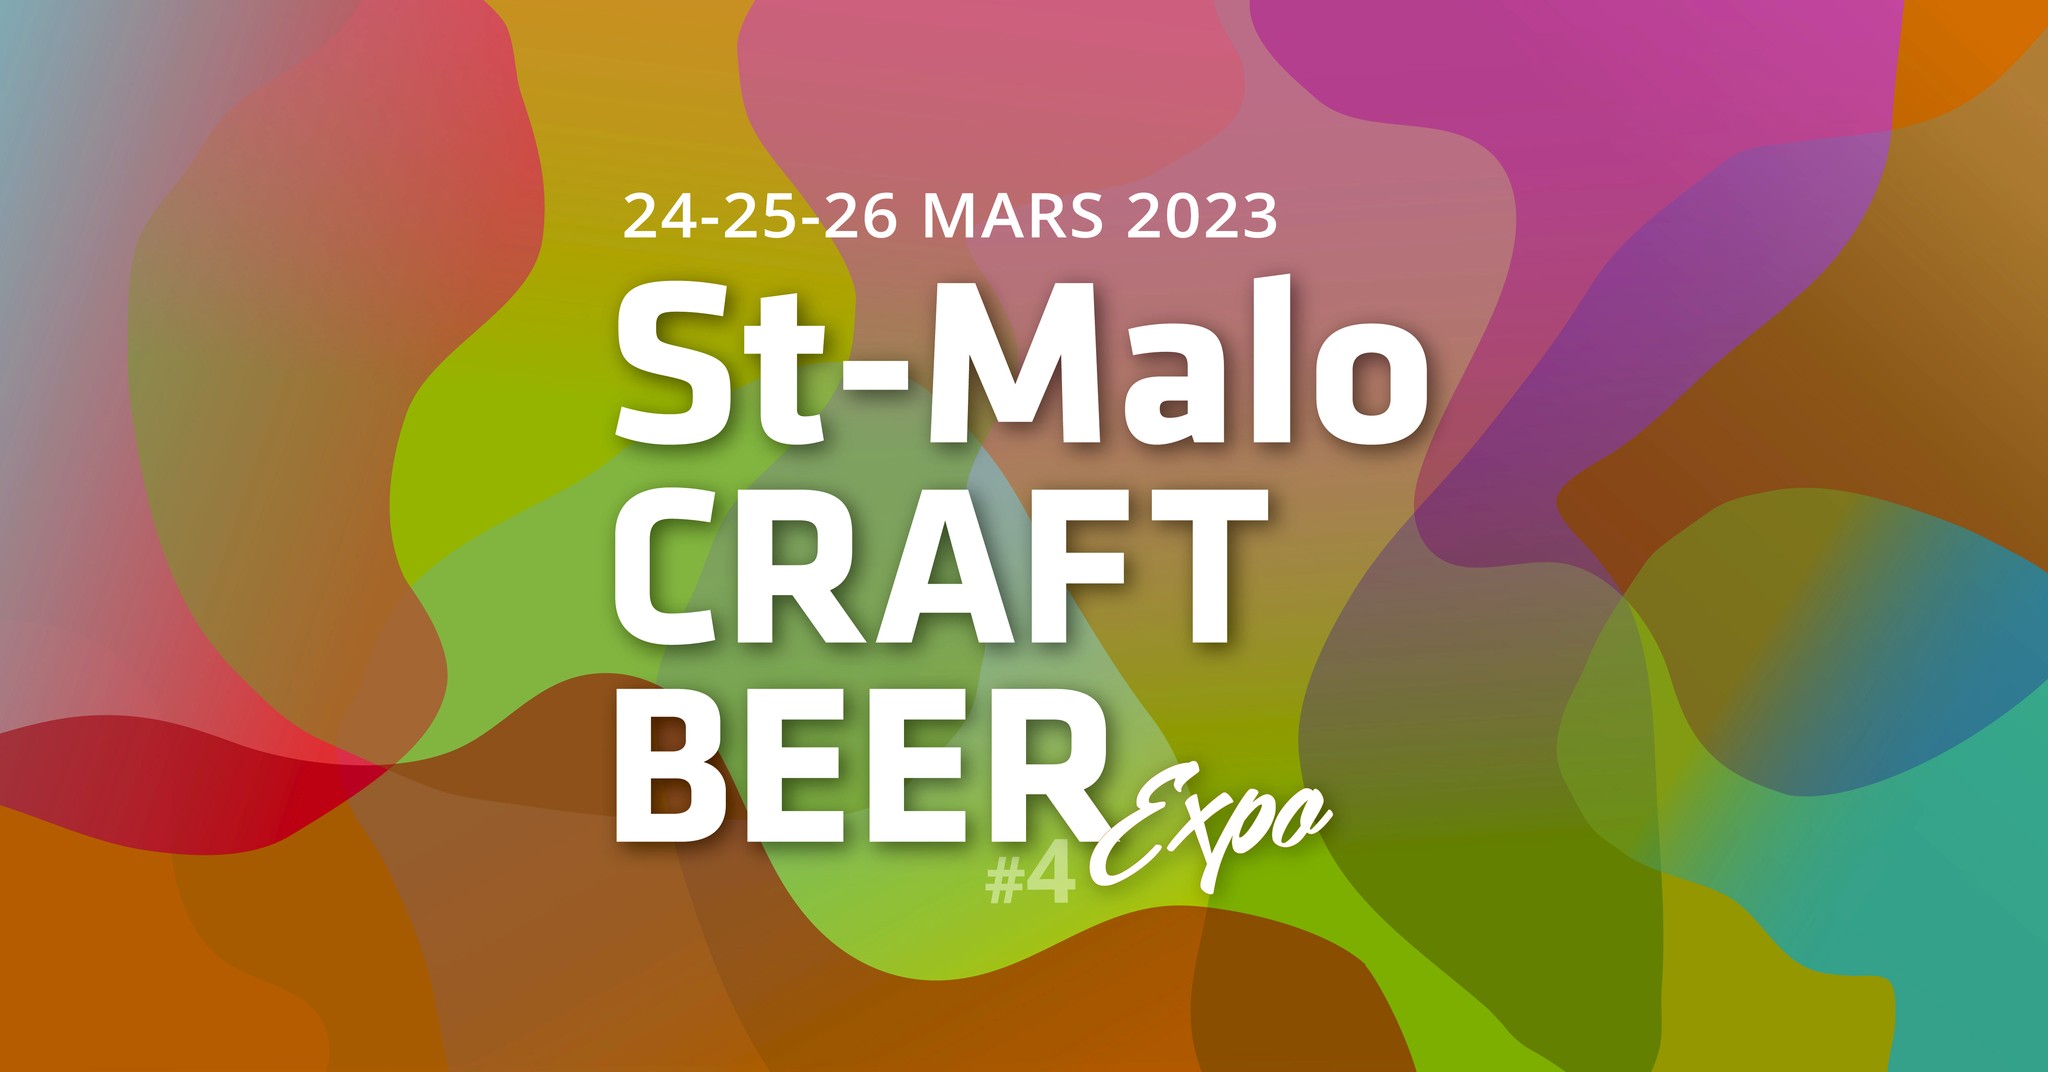 st malo craft beer expo 2023 Parc Expositions de SaintMalo en Bretagne